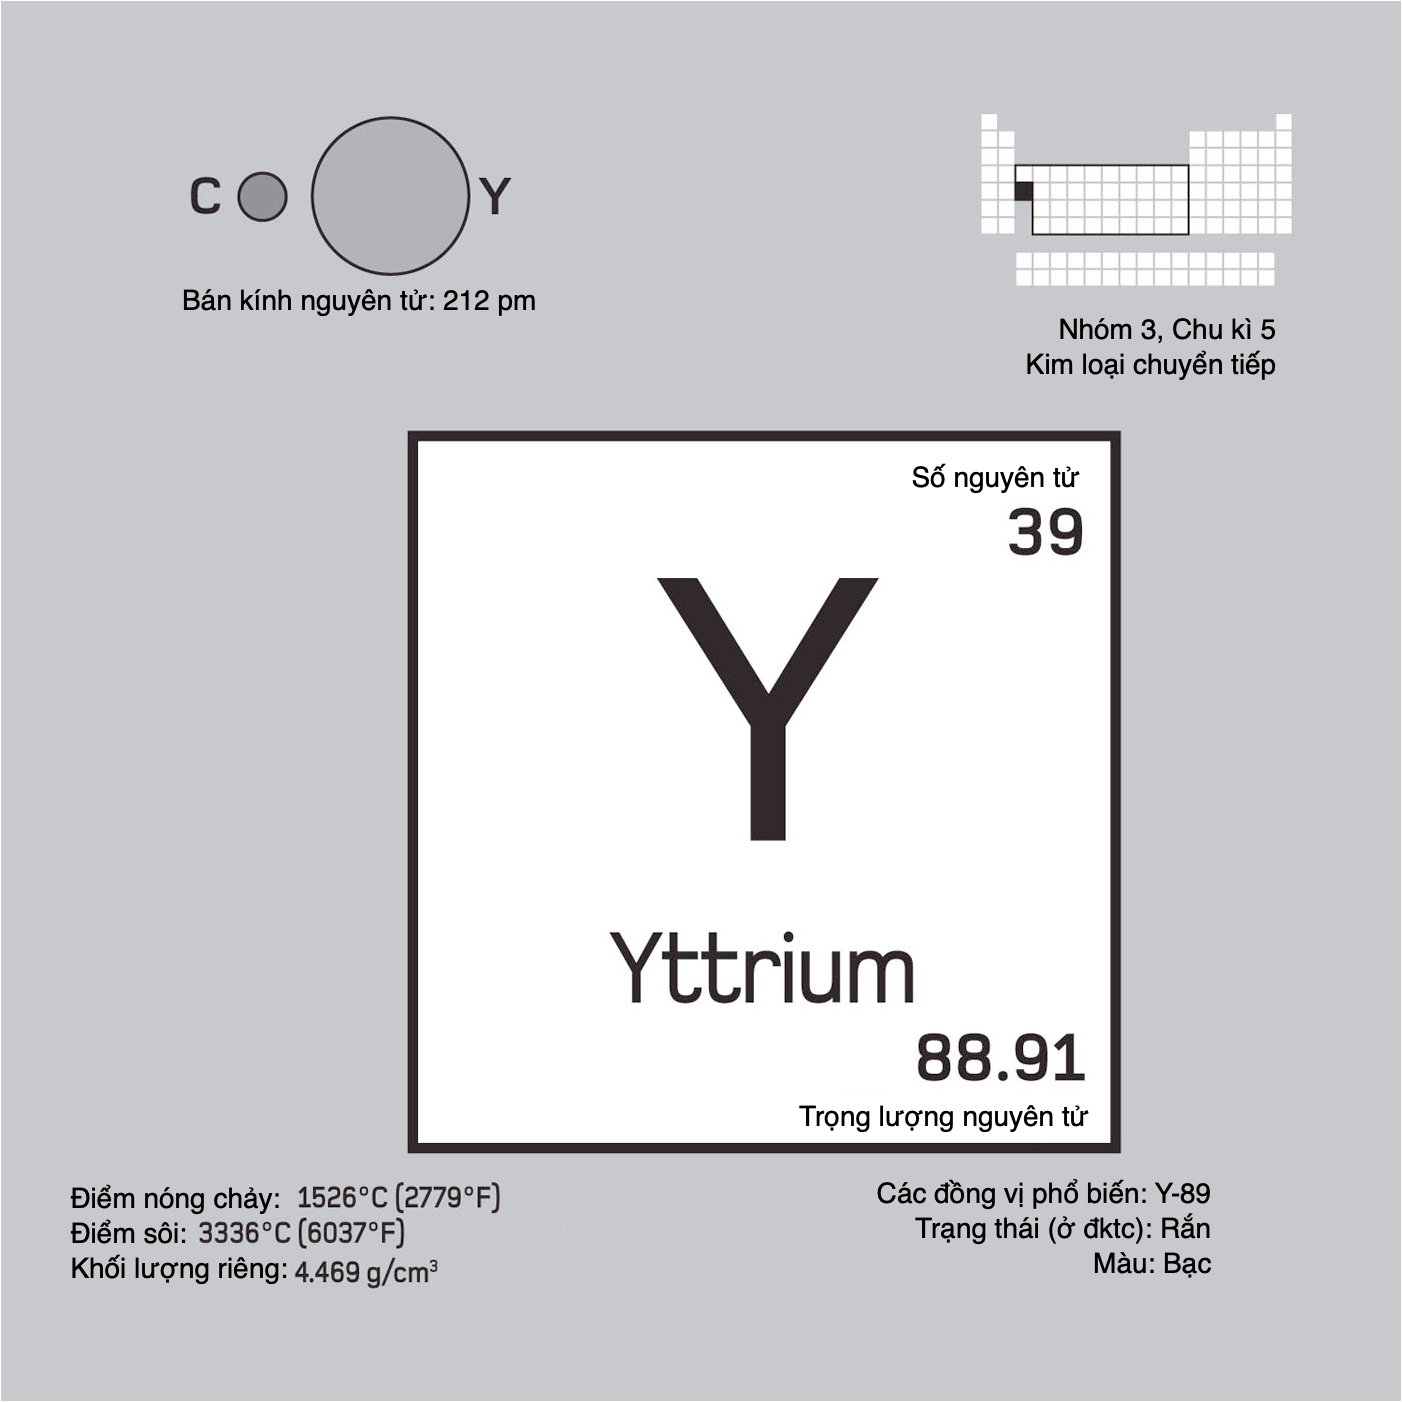 Yttrium